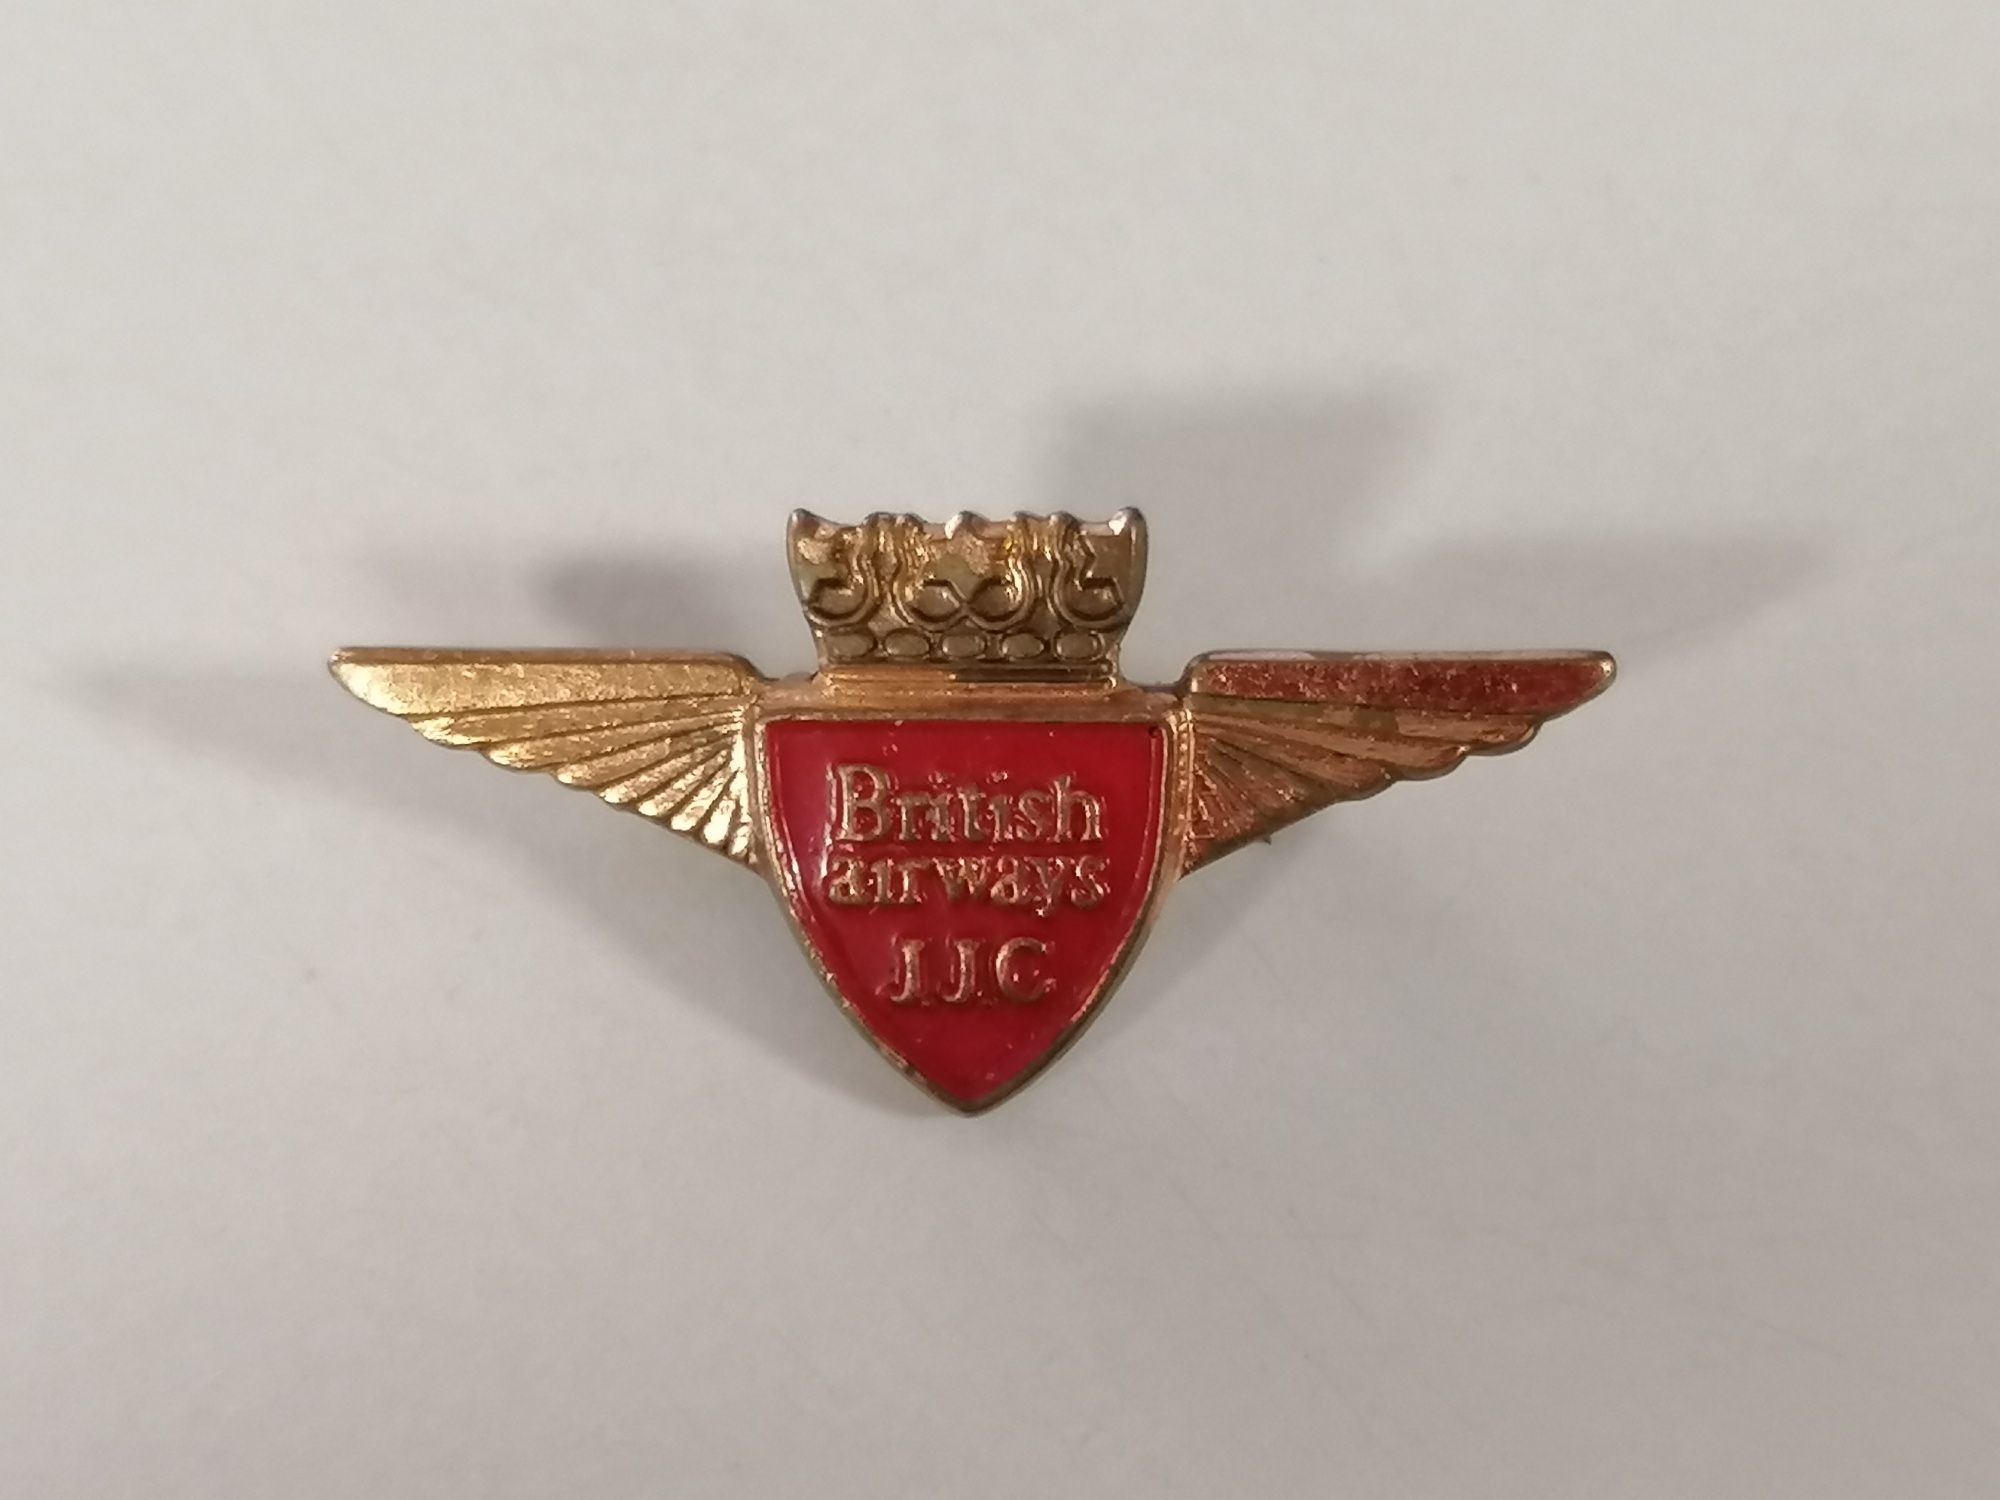 Alfinete antigo da companhia aérea inglesa, British Airlines